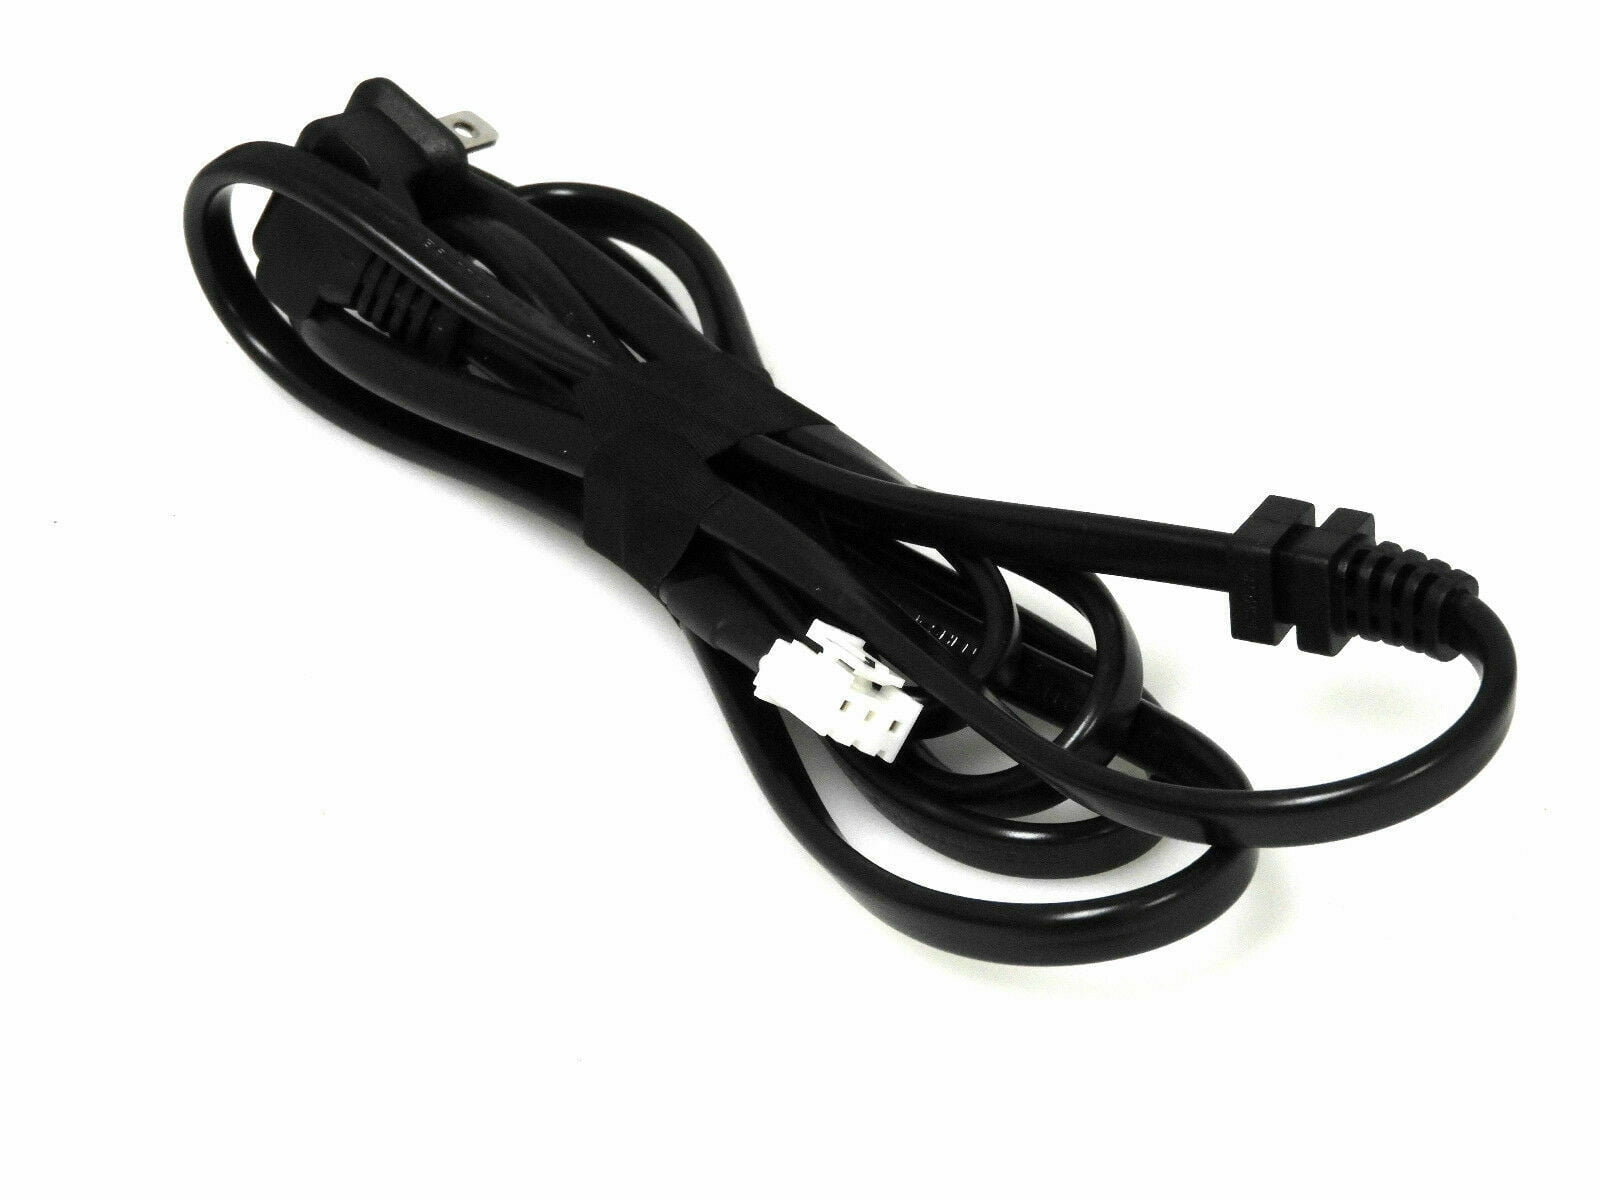 60UJ6540 60UJ7700 60UJ6050 ReadyWired Power Cord Cable for LG TV 50UK6300 50UK6500 60UJ6300